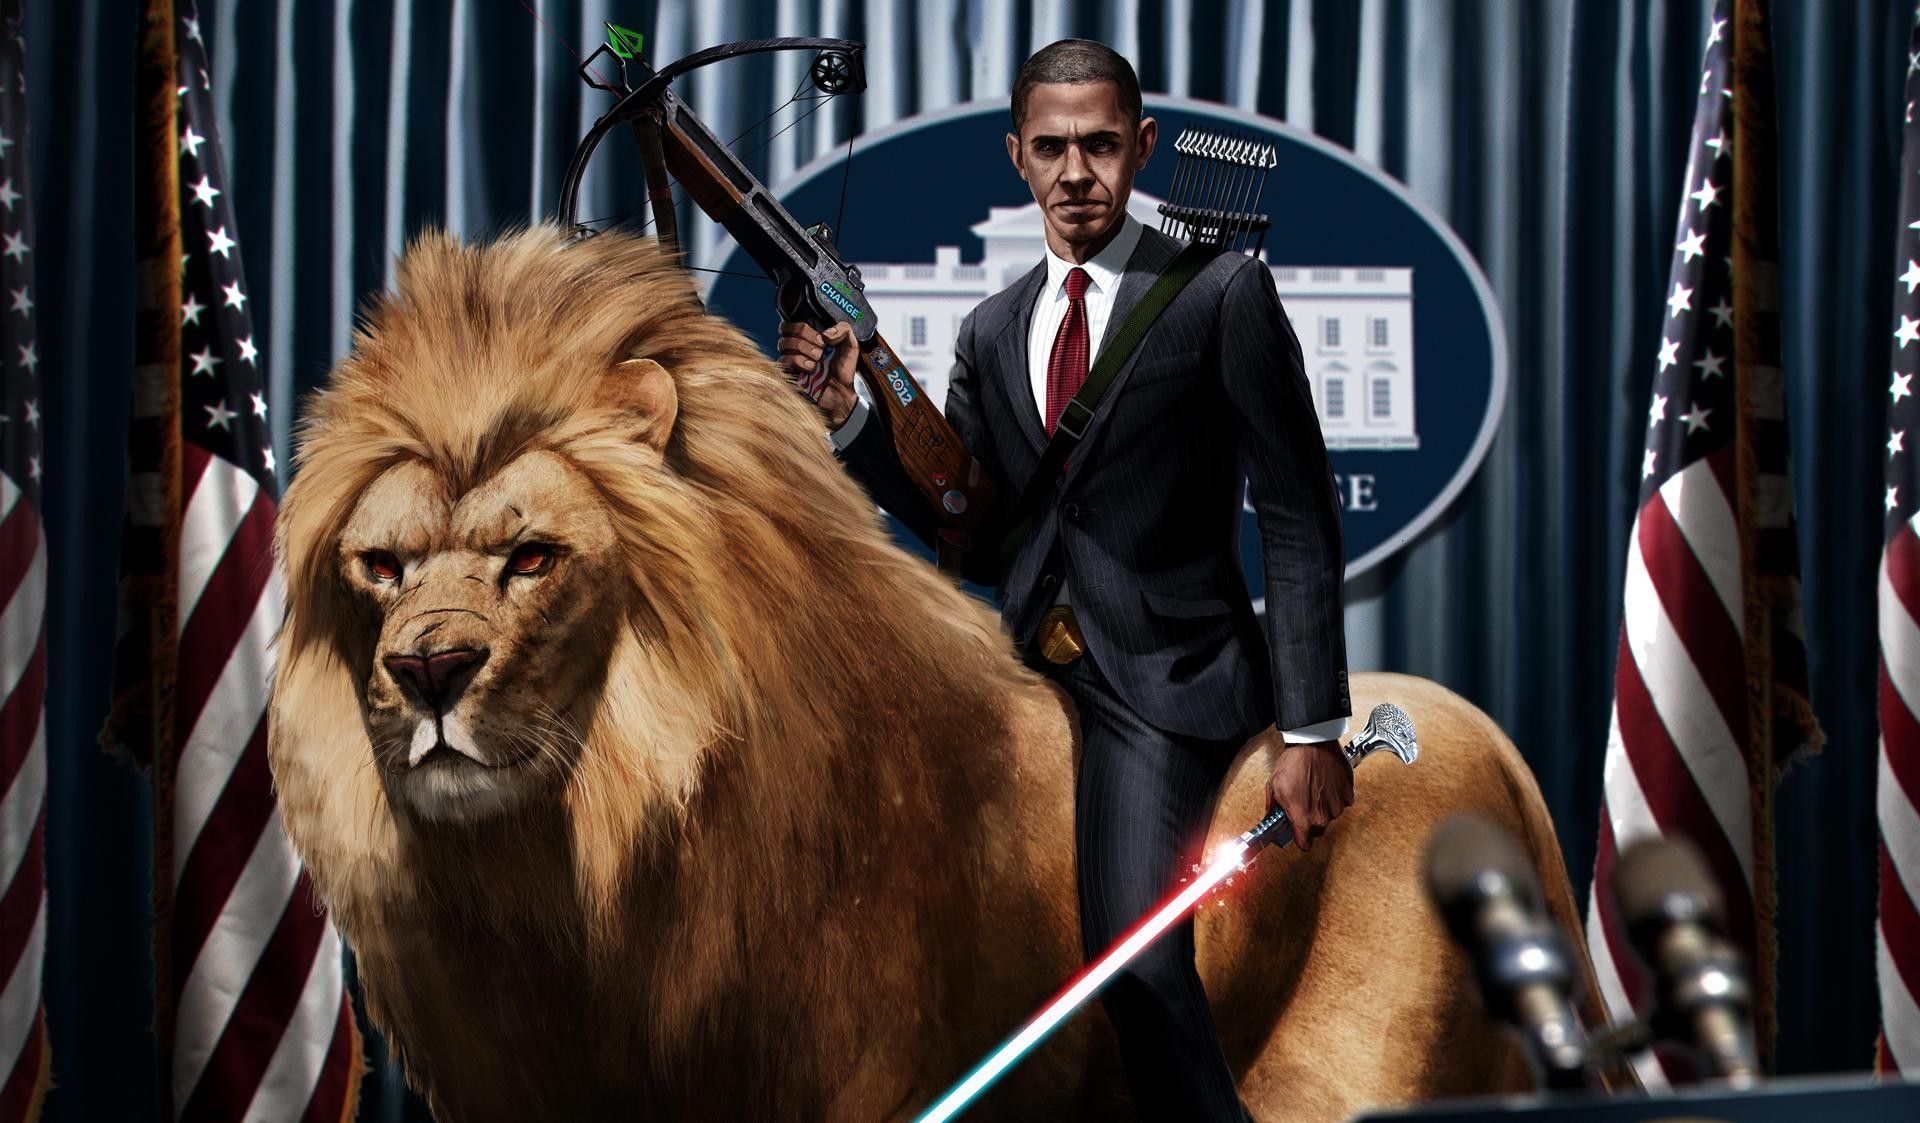 Barack Obama saddled lion wallpapers and images - wallpapers